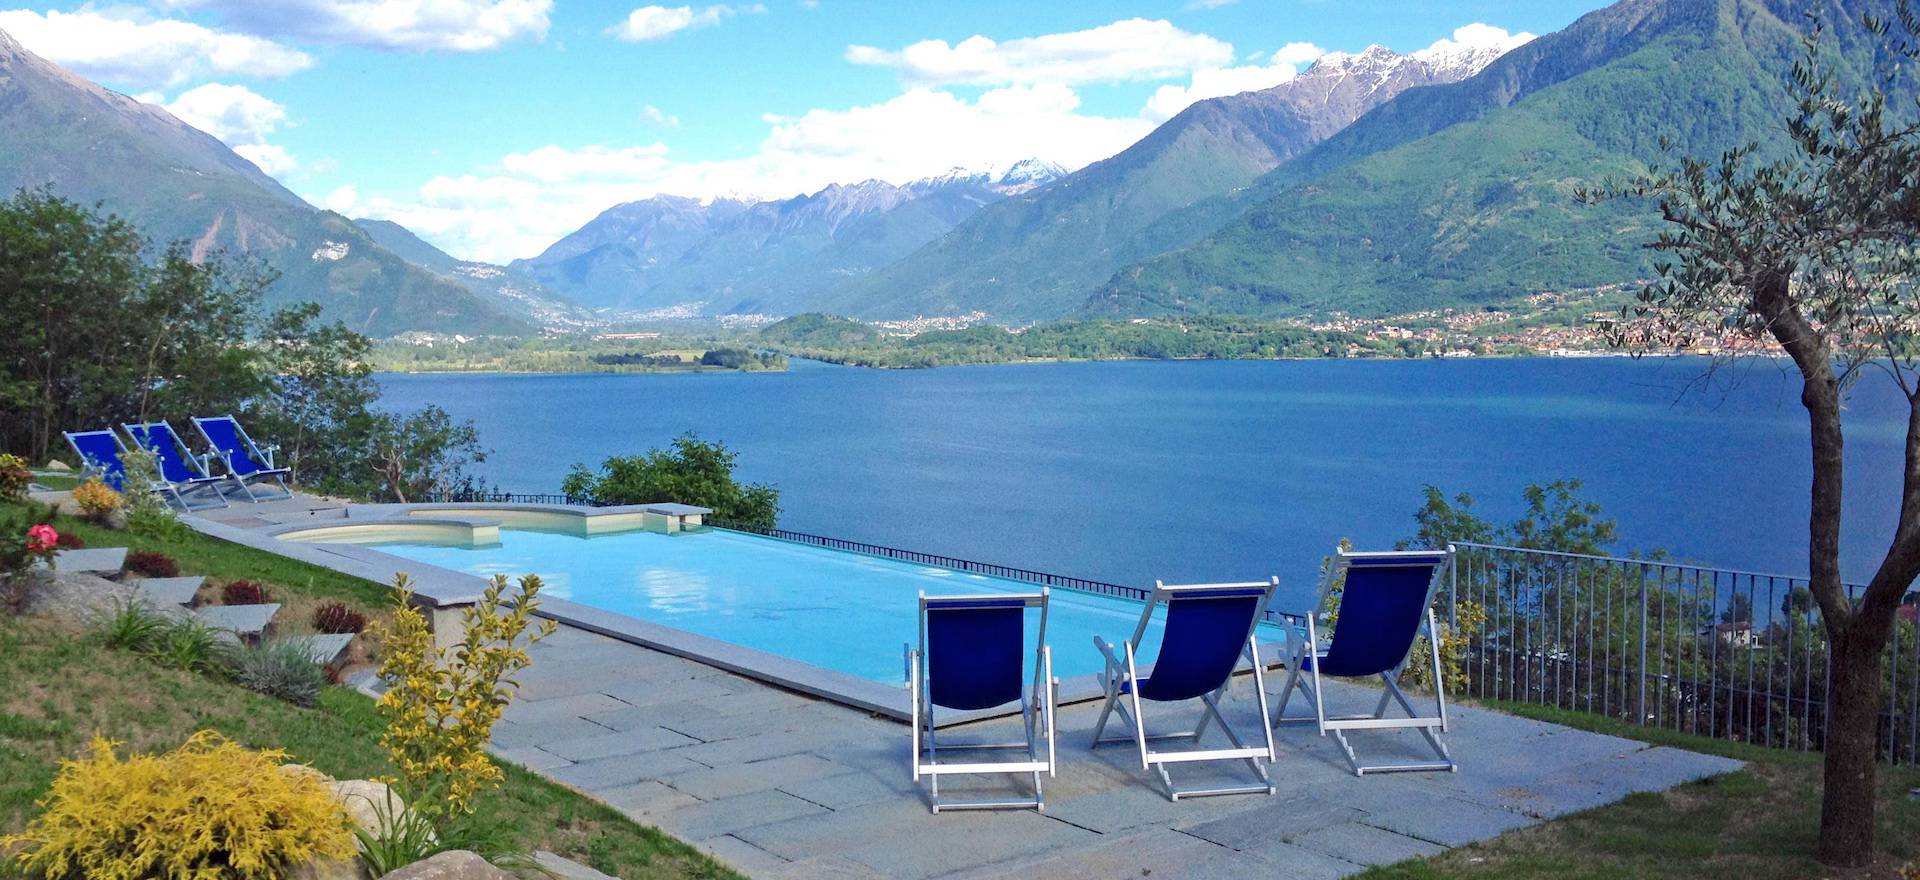 Agriturismo Lake Como and Lake Garda Residence with unique view of Lake Como